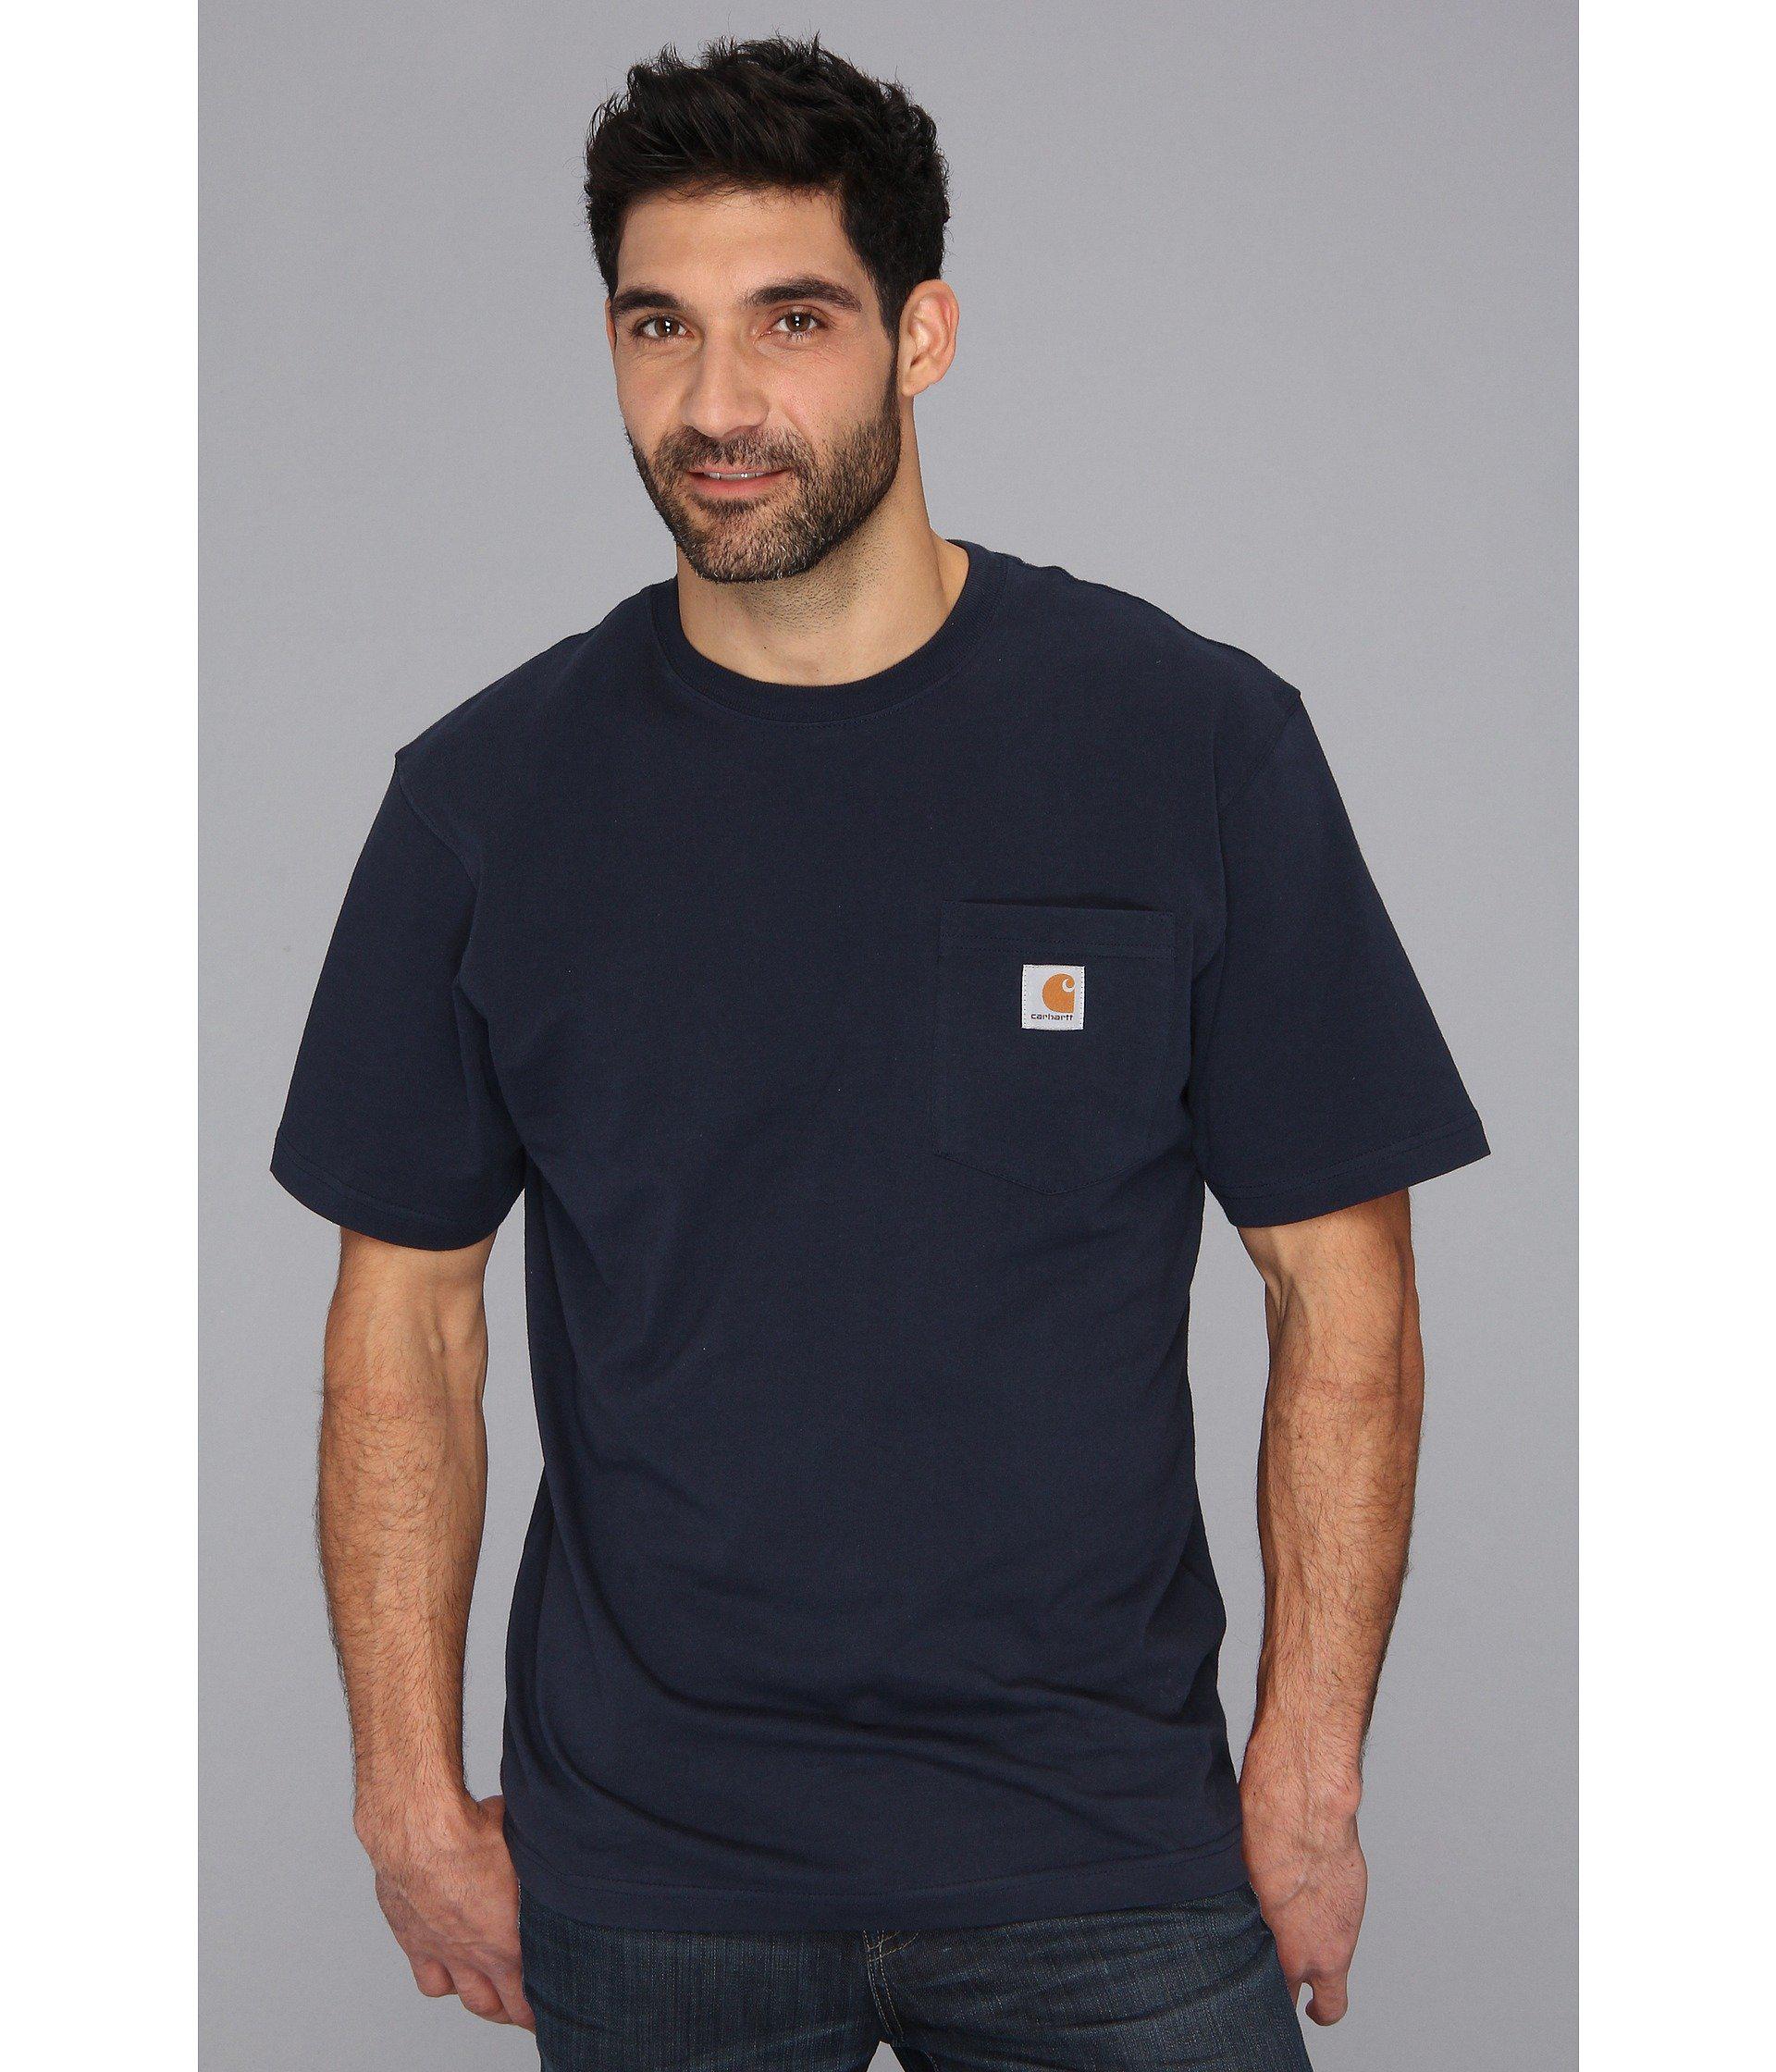 Men S T Shirts Carhartt Herren T Shirt Graphic T Shirt S S Navy Clothes Shoes Accessories Evedding It